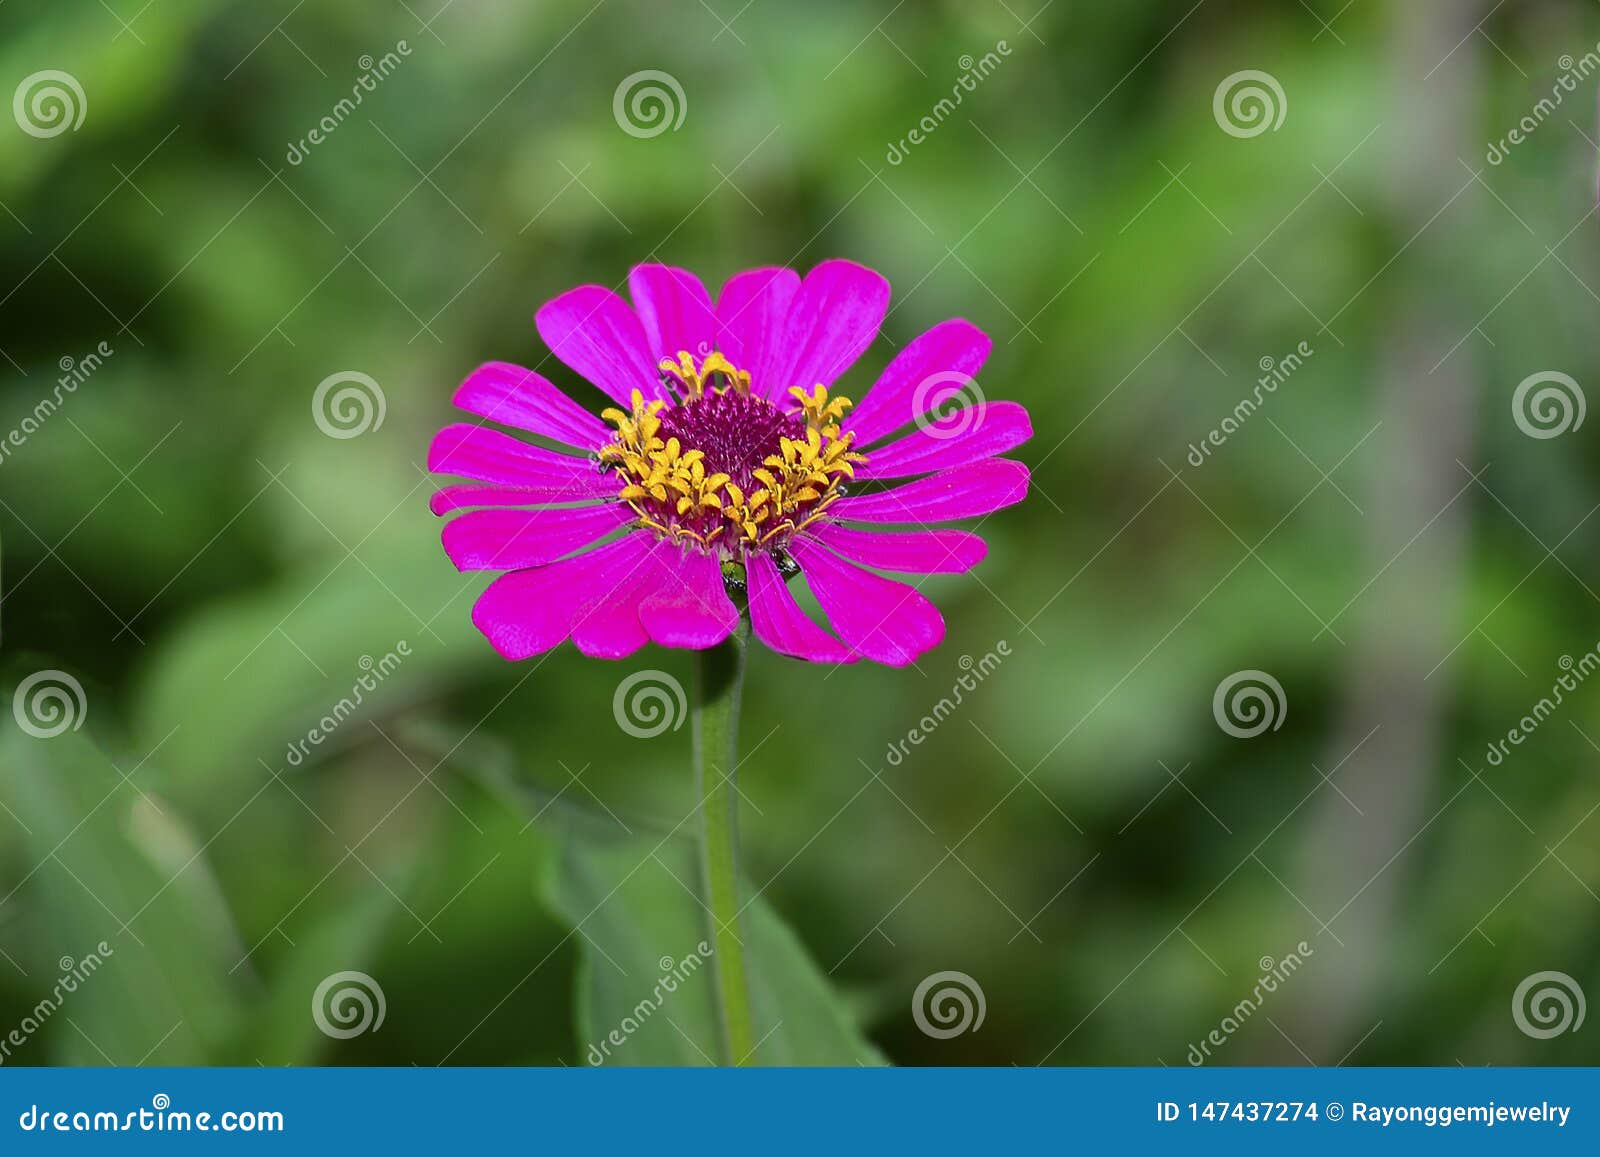 Purple Flowers Are Naturally Beautiful. Eye Comfort Stock Photo - Image ...